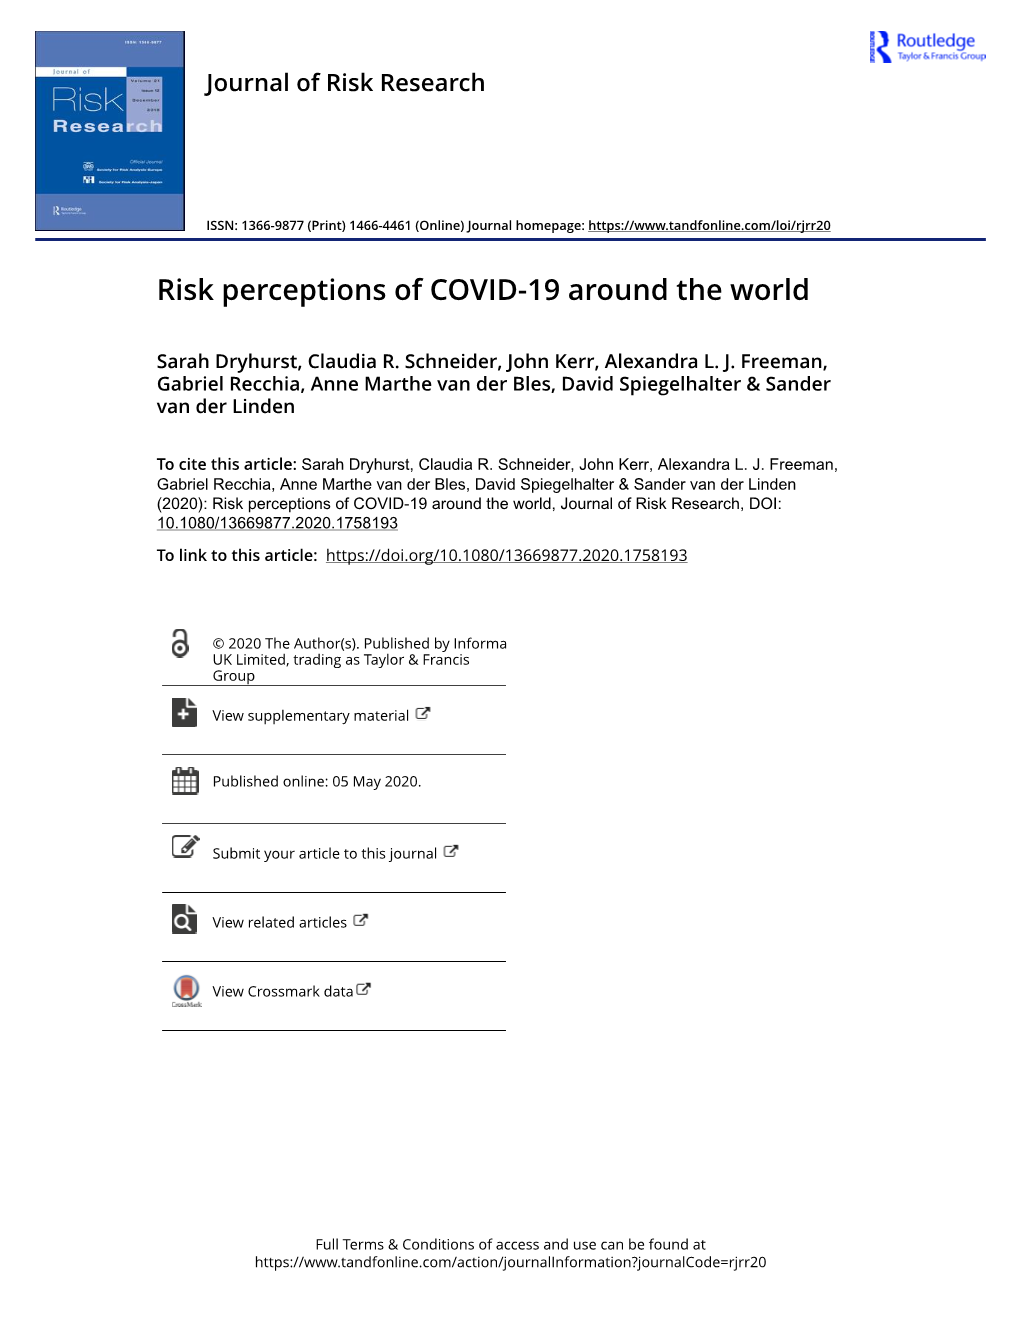 Risk Perceptions of COVID-19 Around the World